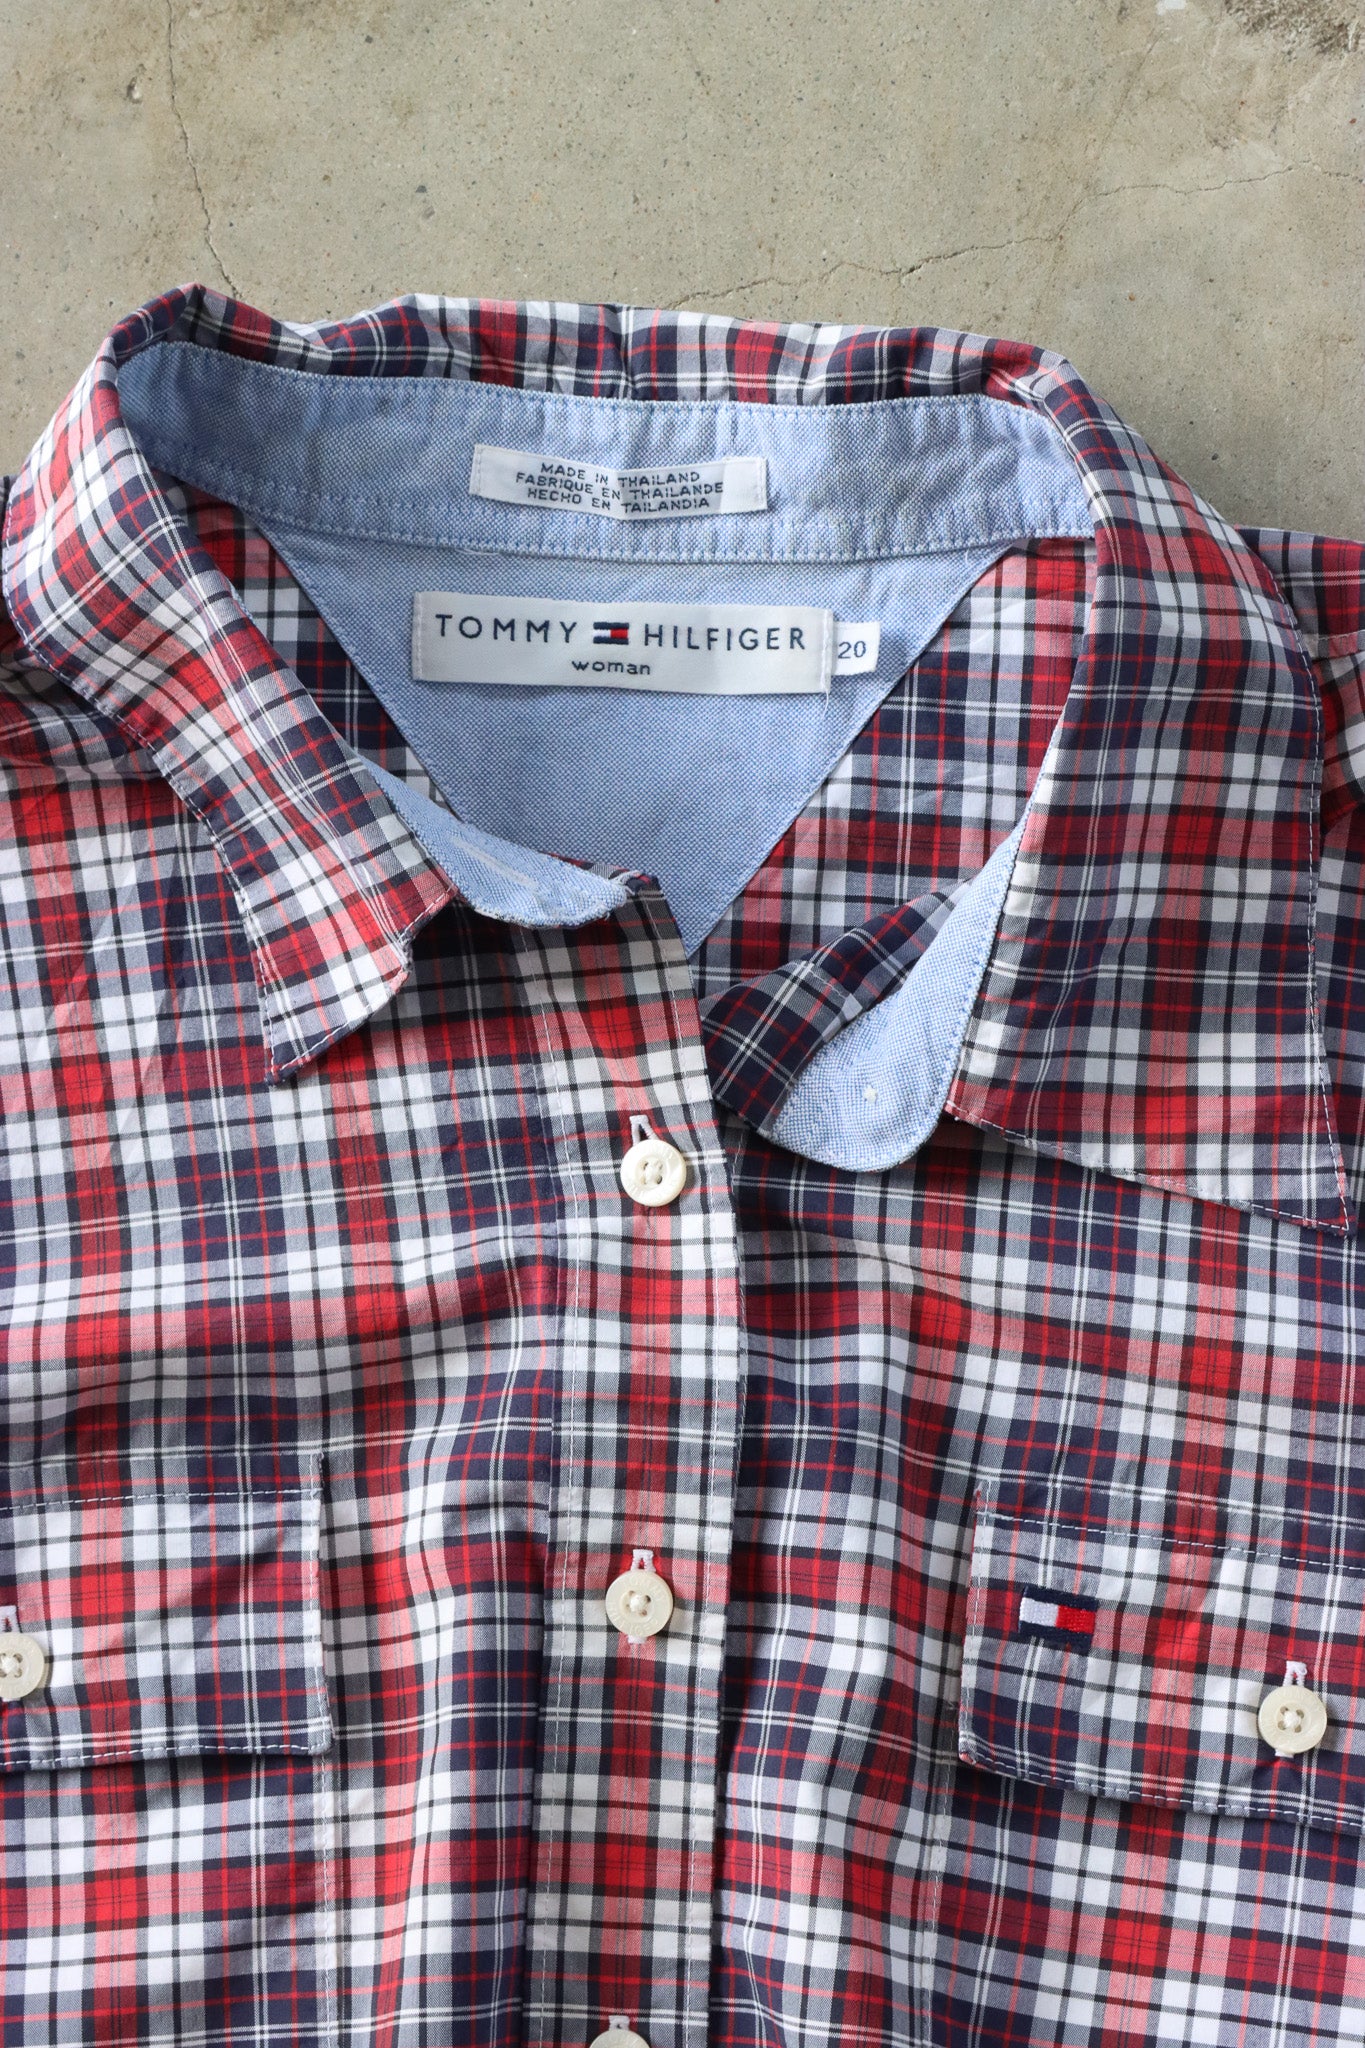 Vintage Tommy Hilfiger Shirt Small